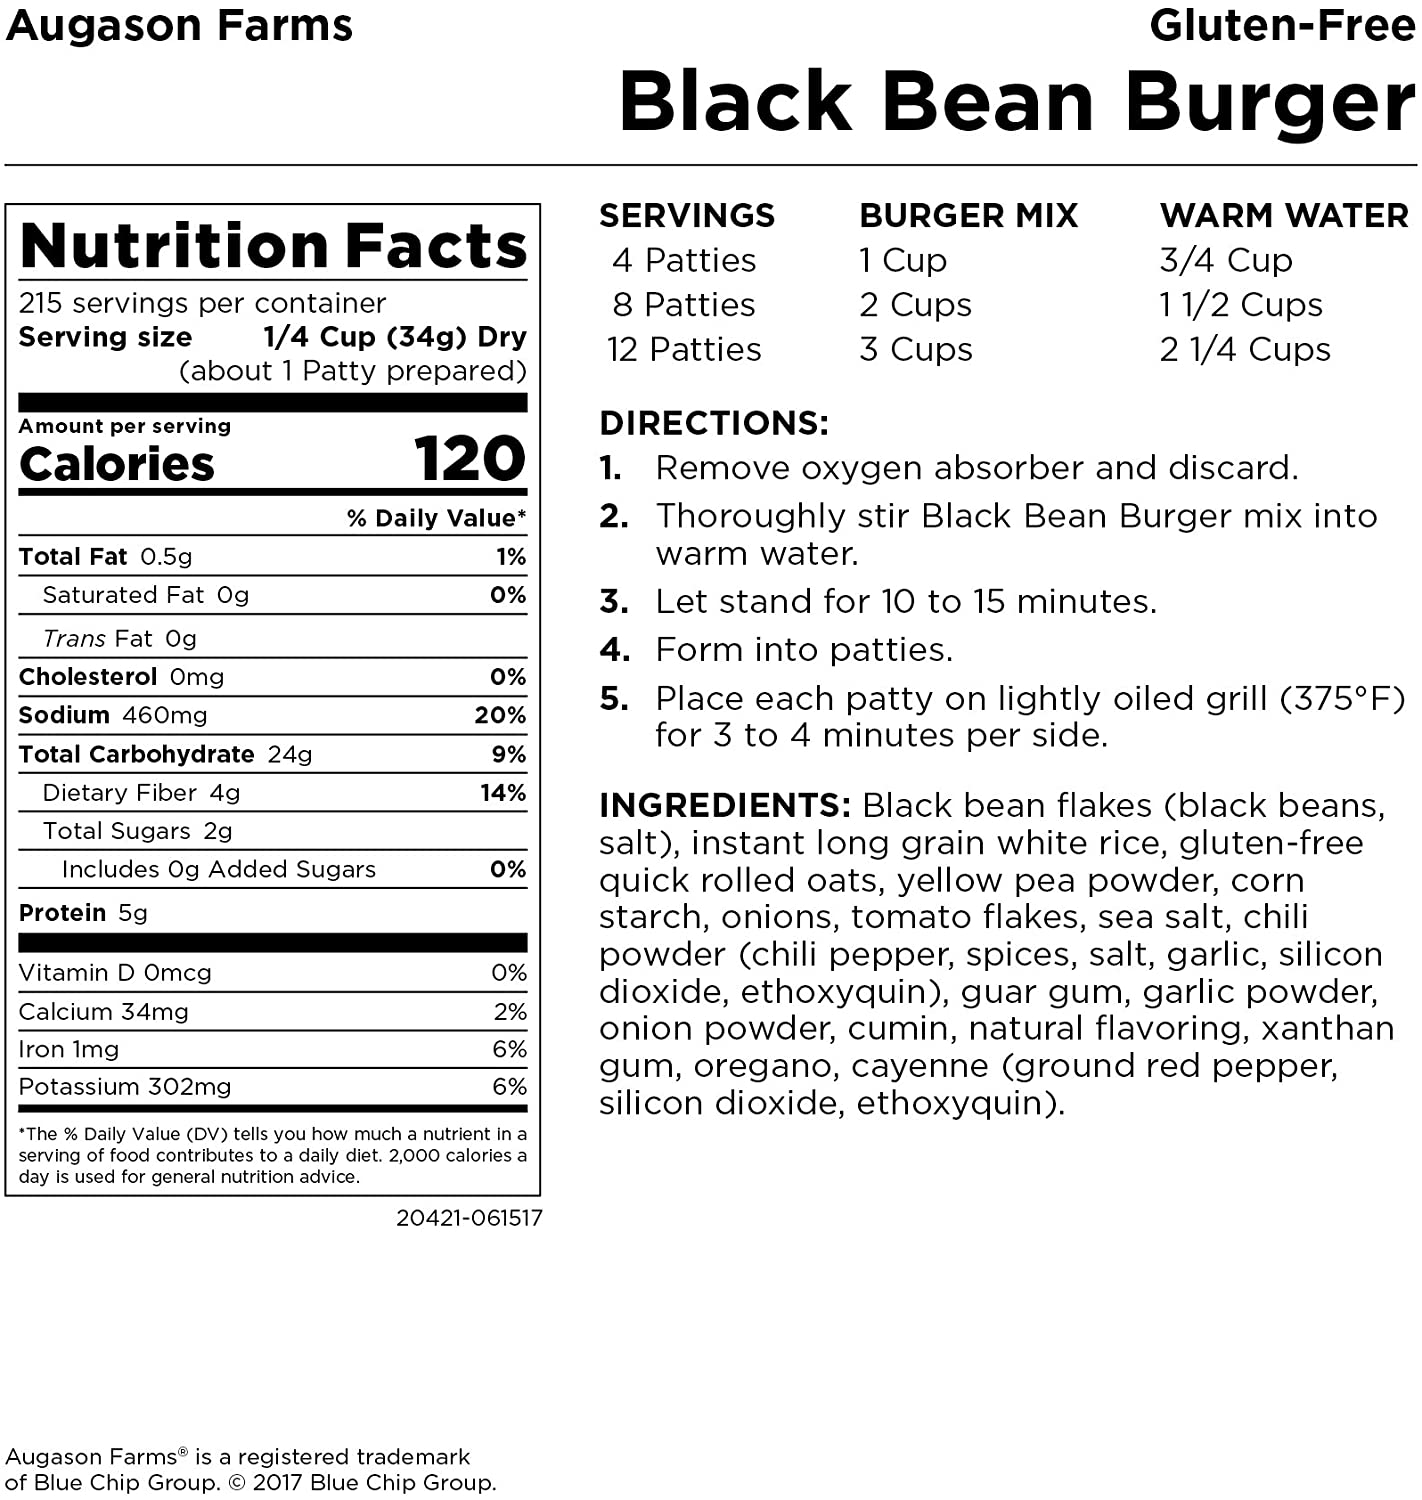 Black bean burger nutrition label from Augason Farms.